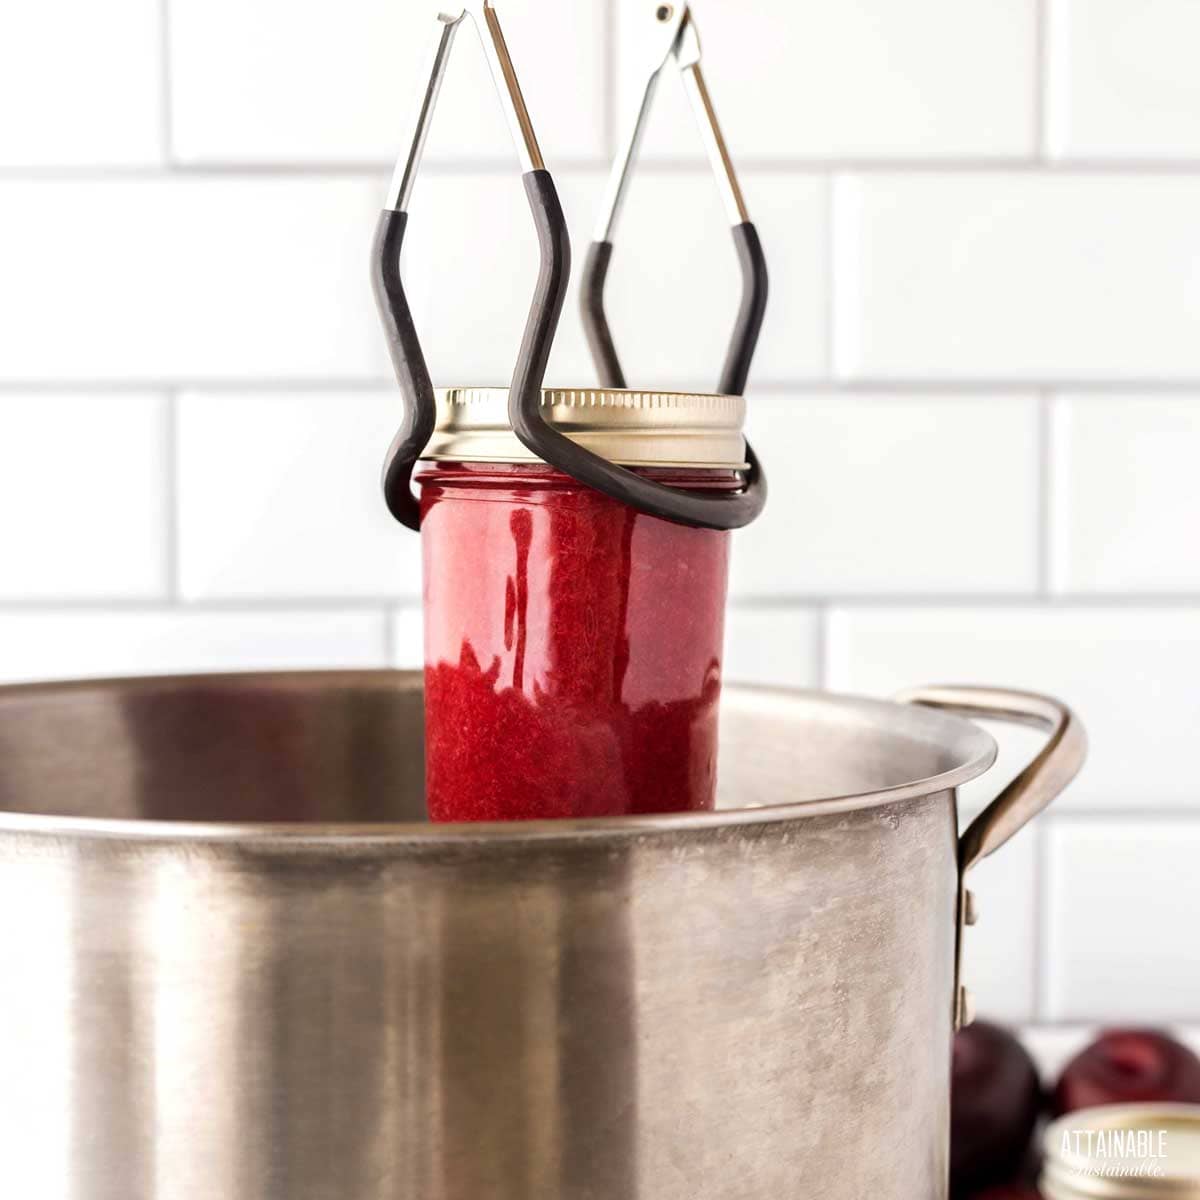 placing a jar of jam into a water bath.